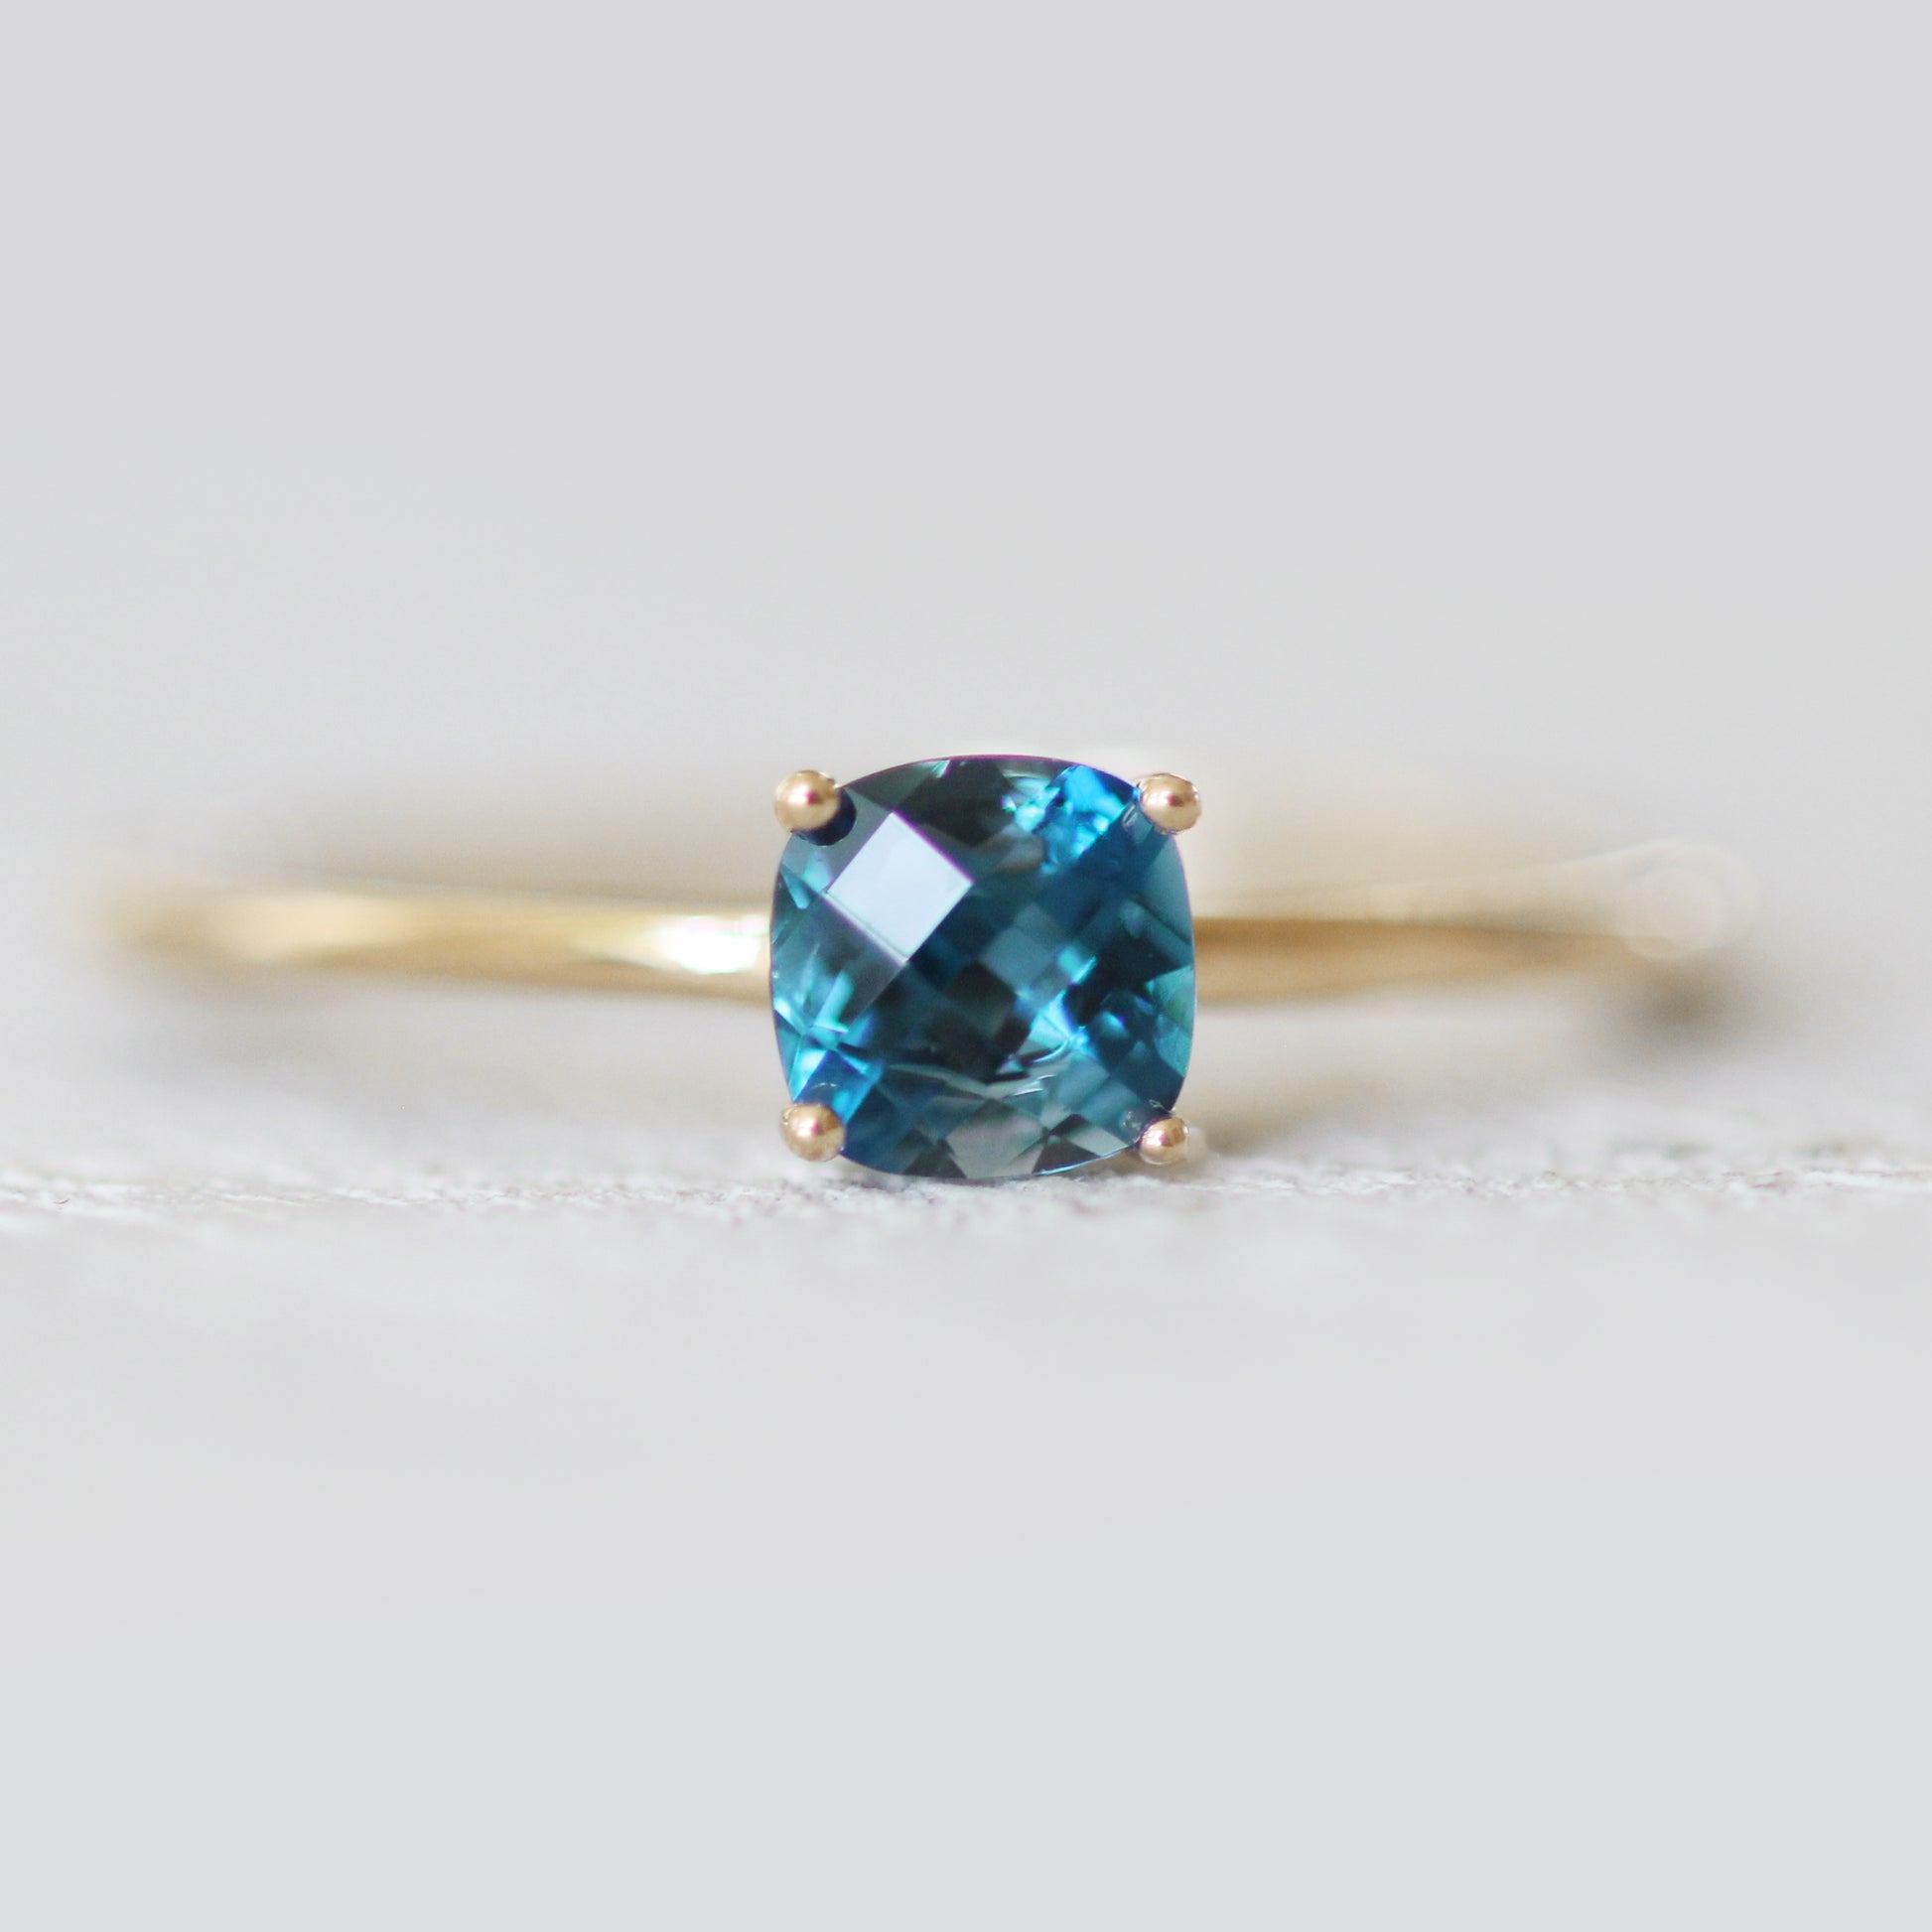 London Blue Topaz .75 carat Cushion Cut - Your choice of metal - Custom - Midwinter Co. Alternative Bridal Rings and Modern Fine Jewelry